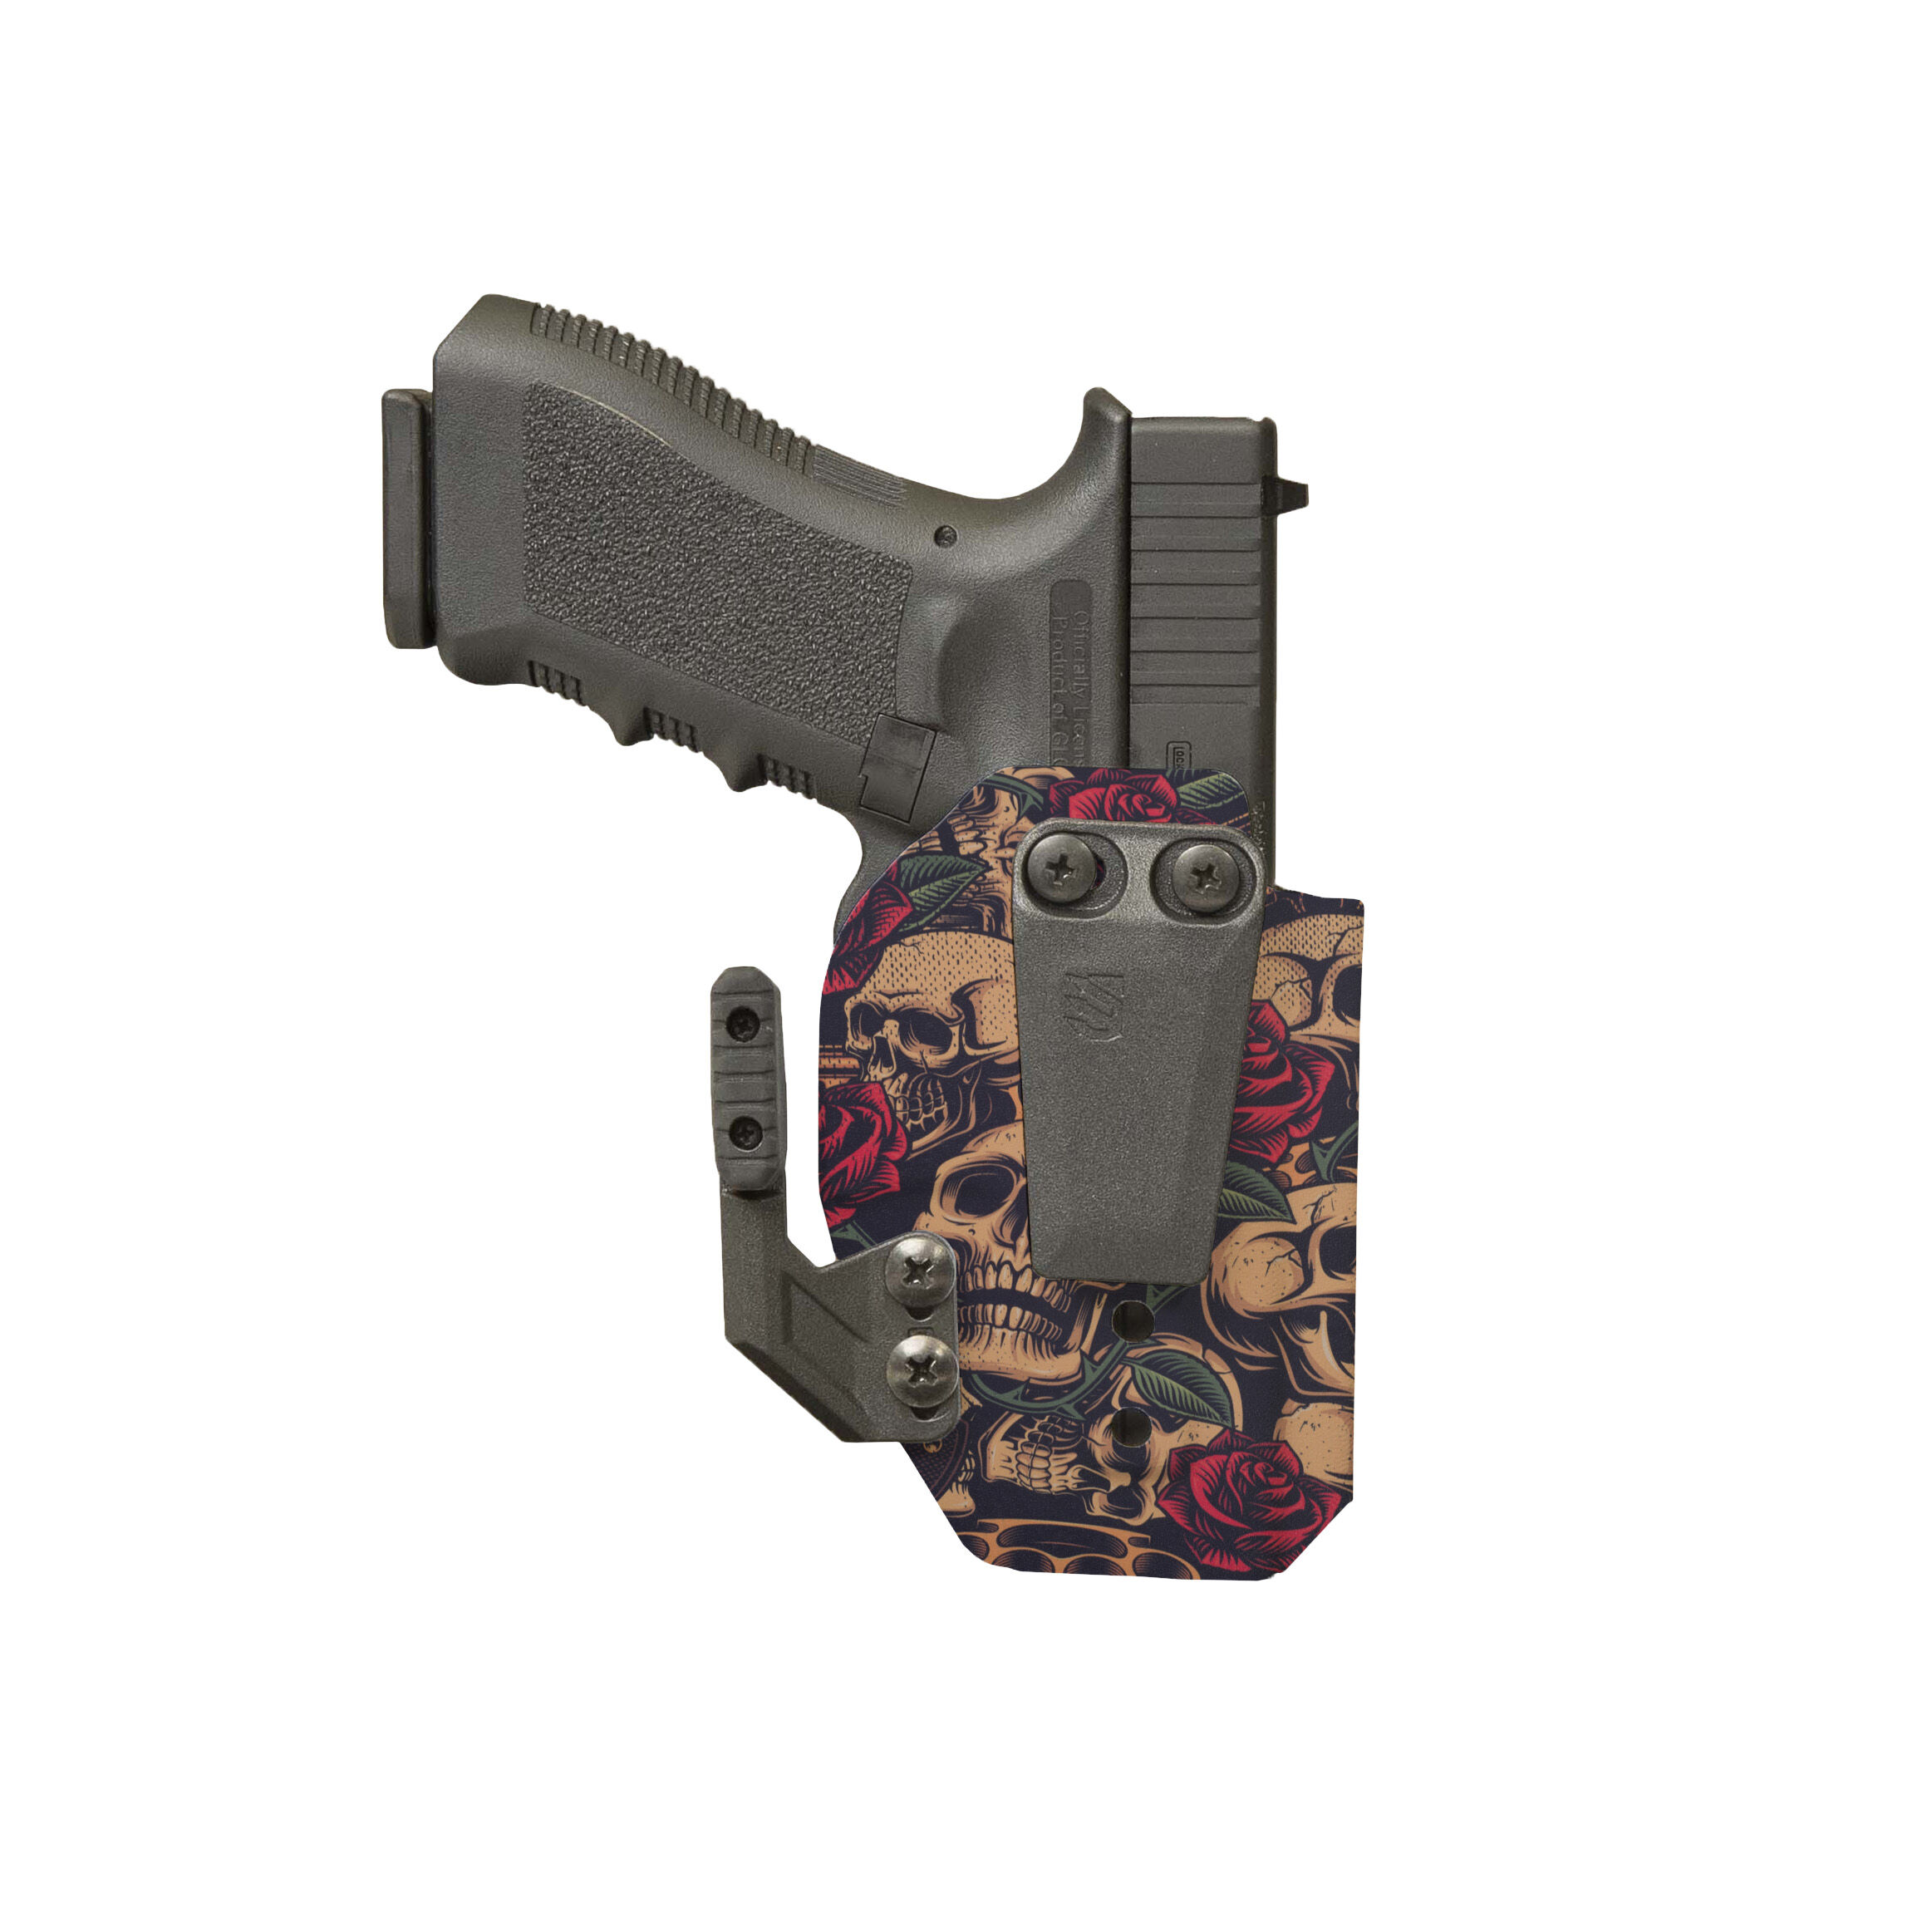 Multicam Camouflage Concealed Compact Pistol Handgun Holster with Belt Clip UK 